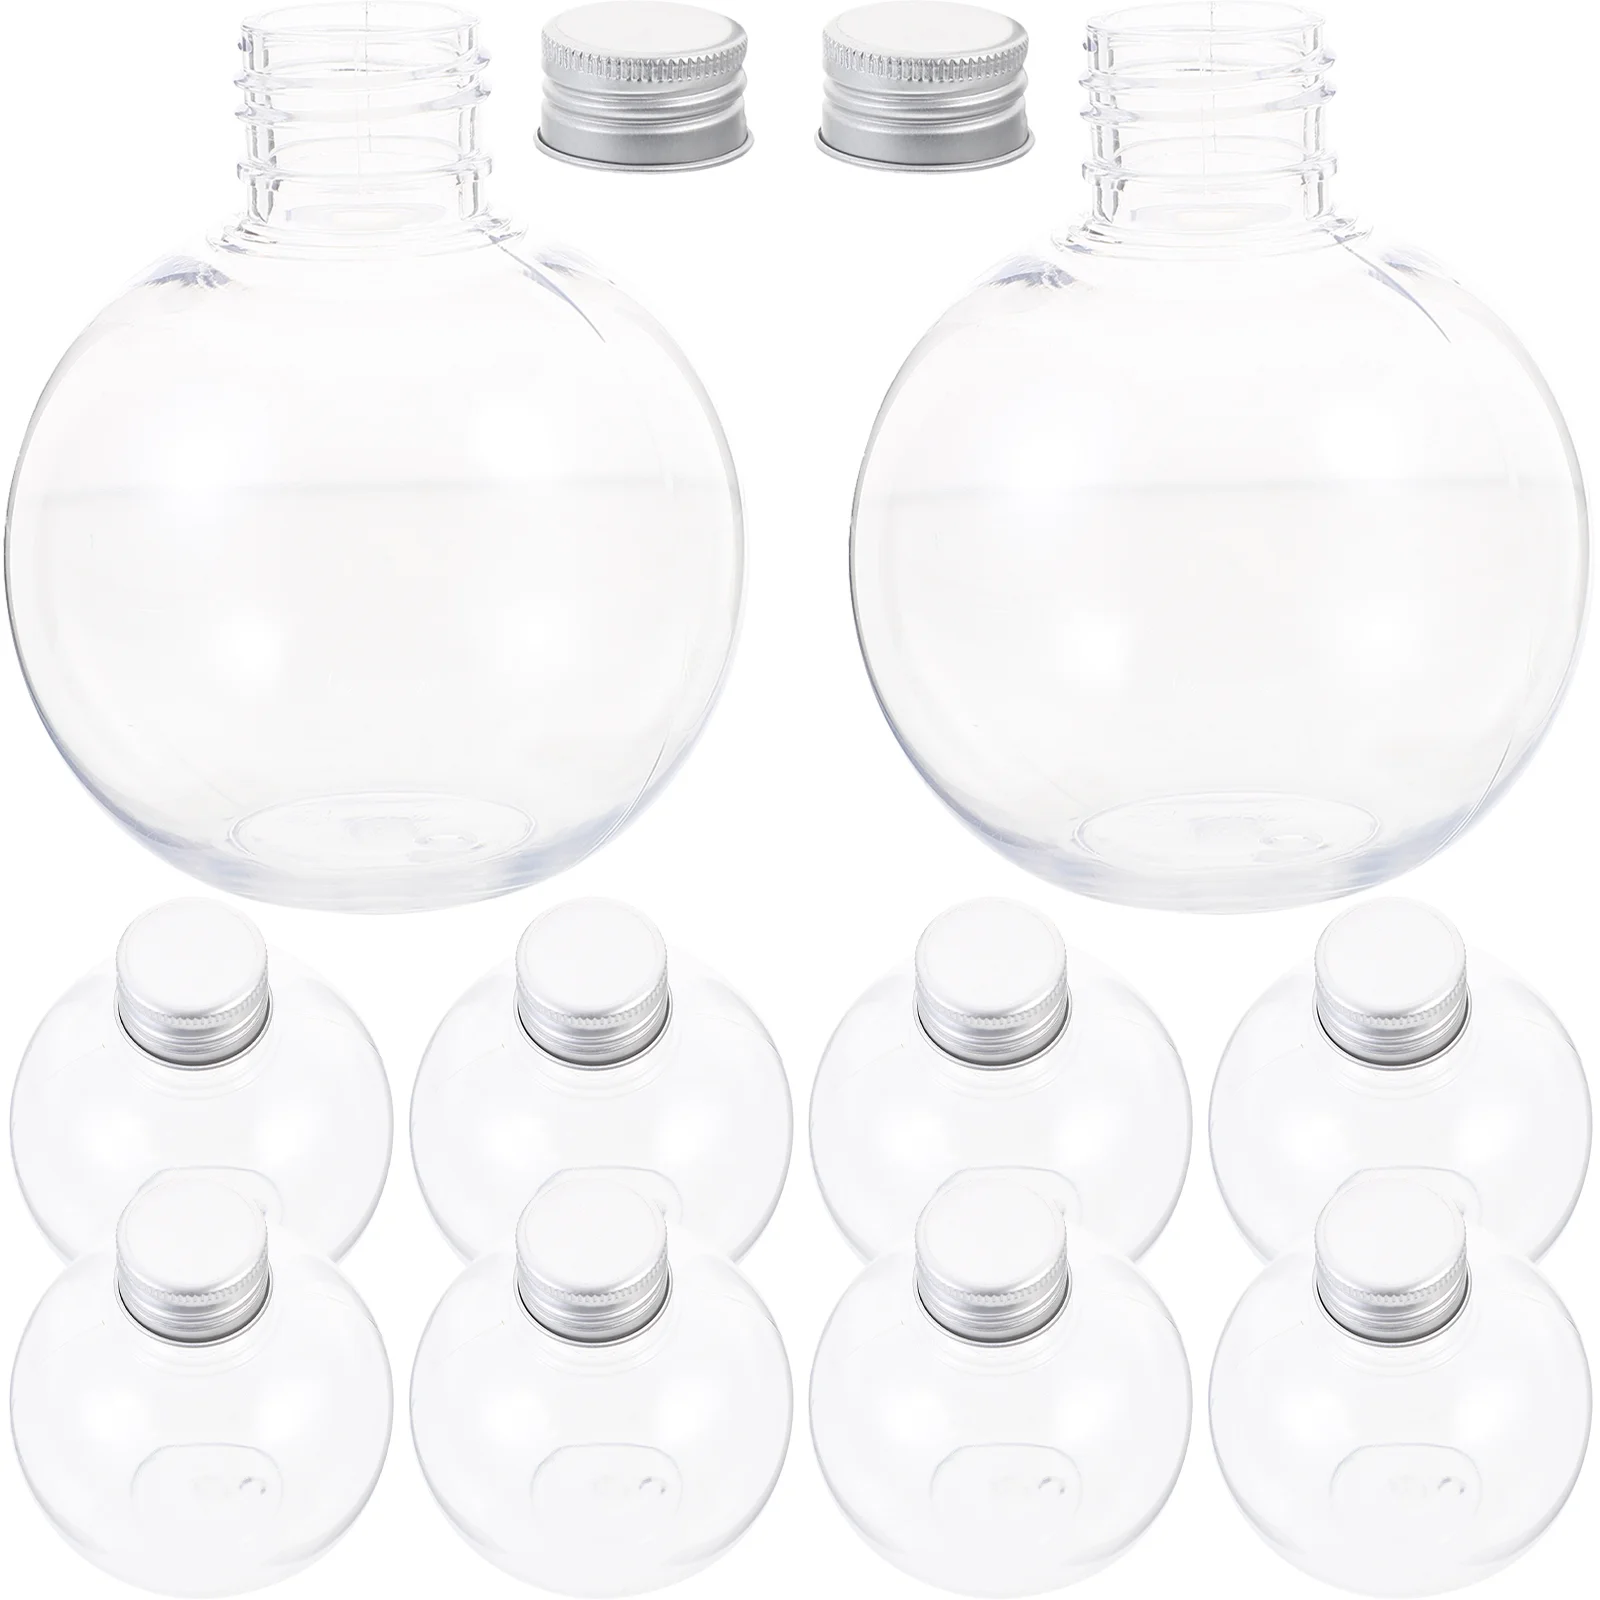 

10 Pcs Milk Bottles Lids Sealing Cold Plastic Bulb Handcraft The Pet Portable Juice Anti-leak Clear Multipurpose Drink